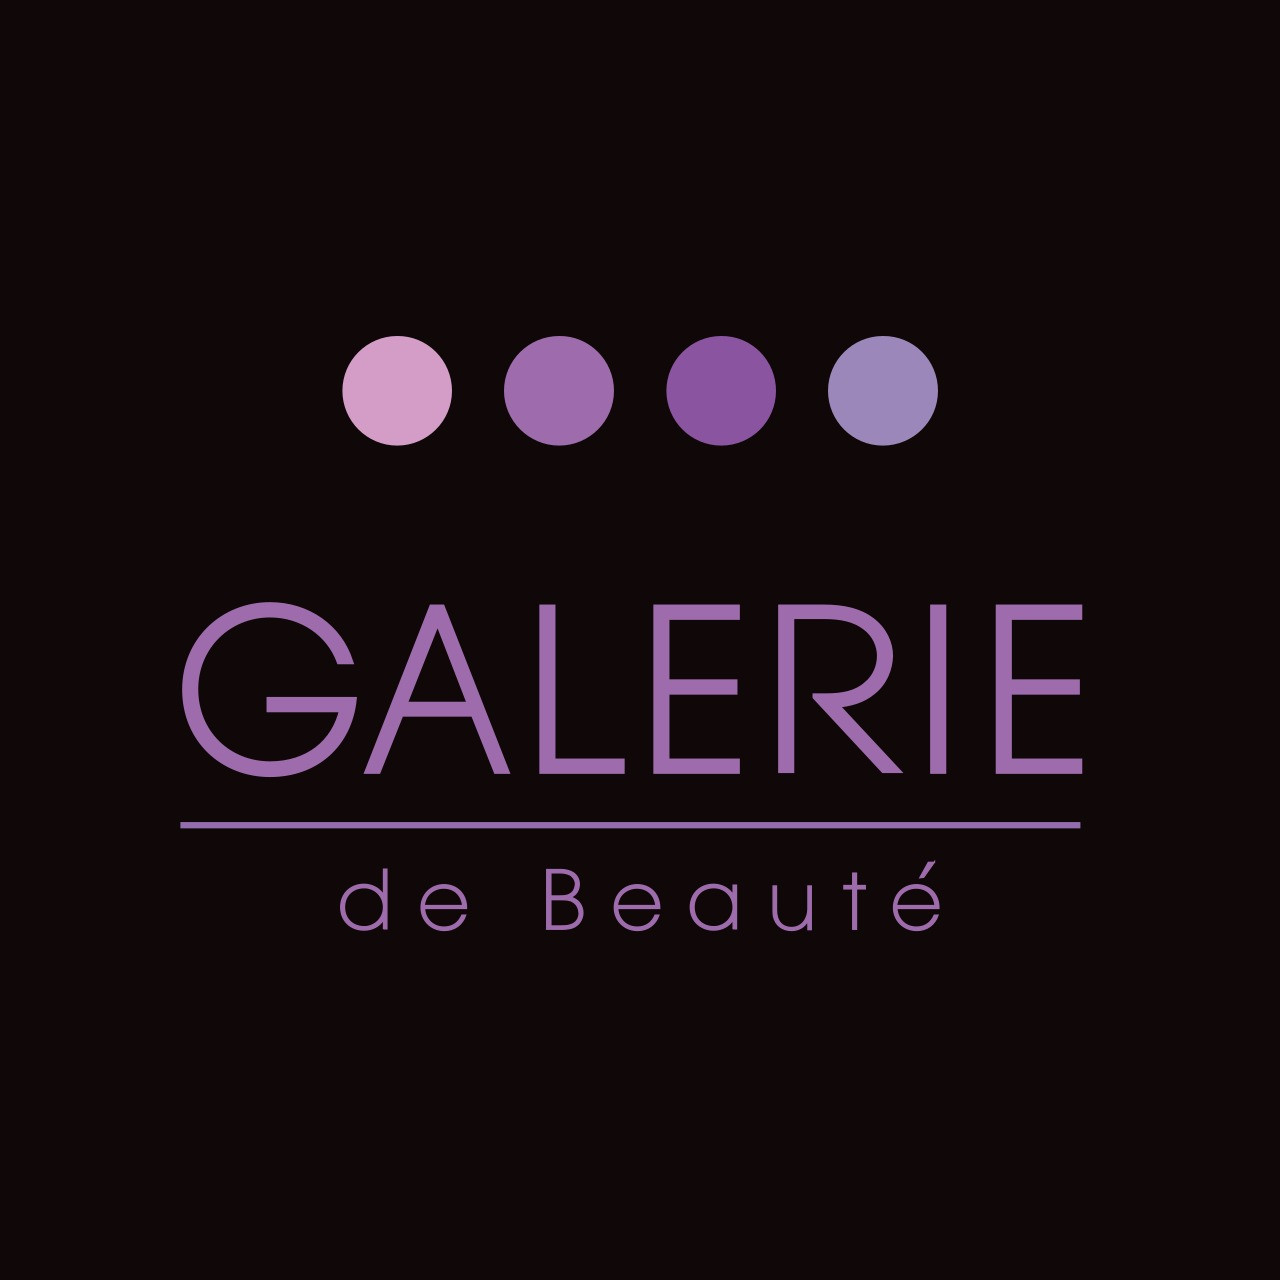 galerie-de-beaute Logo, γκαλερι ντε μπουτε Λογότυπο